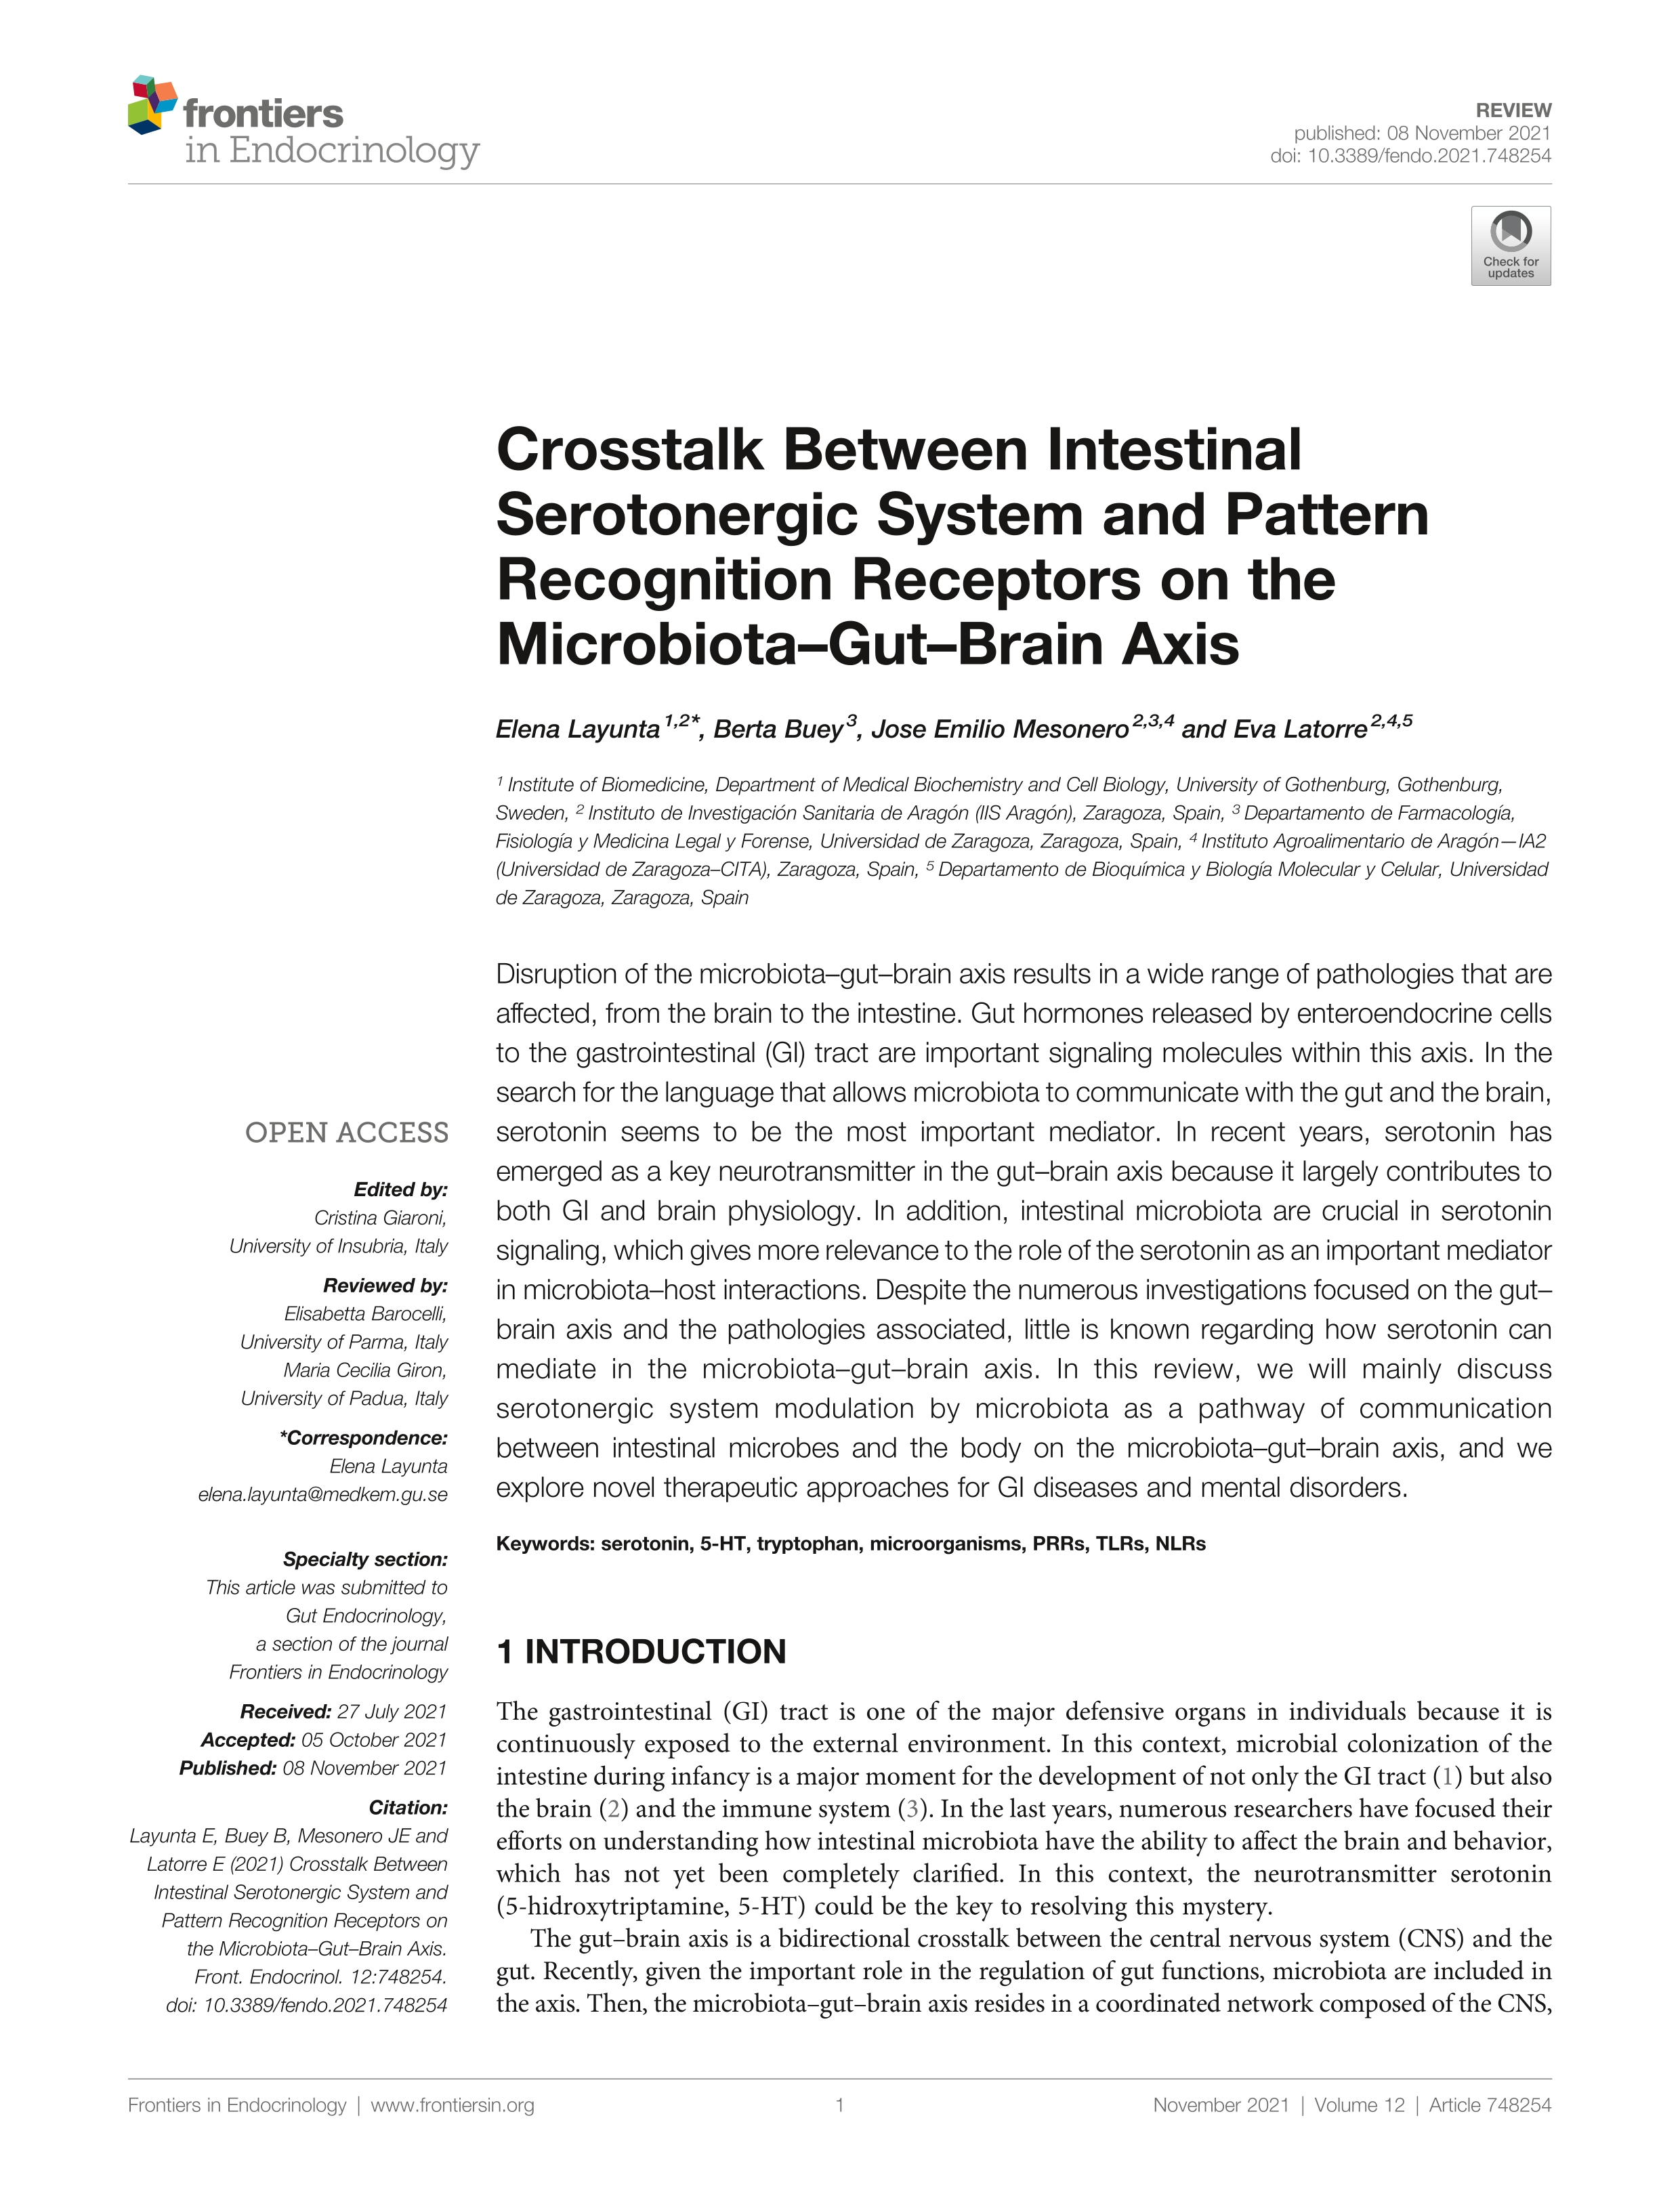 Crosstalk between intestinal serotonergic system and pattern recognition receptors on microbiota-gut-brain axis